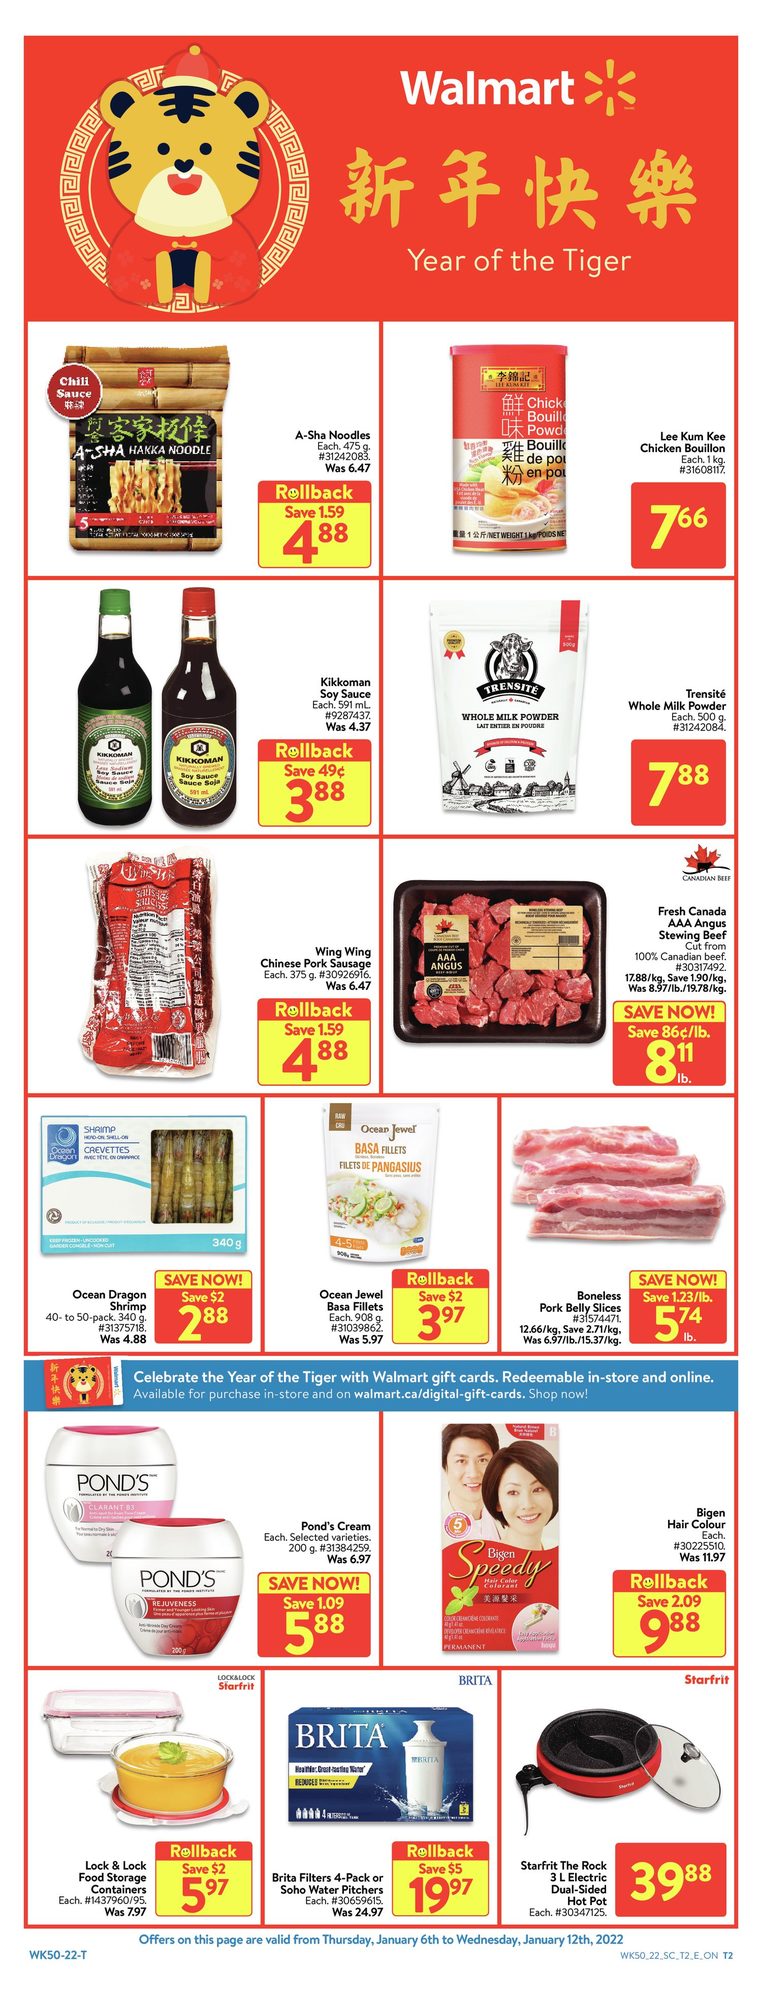 Walmart - Weekly Flyer Specials - Page 4